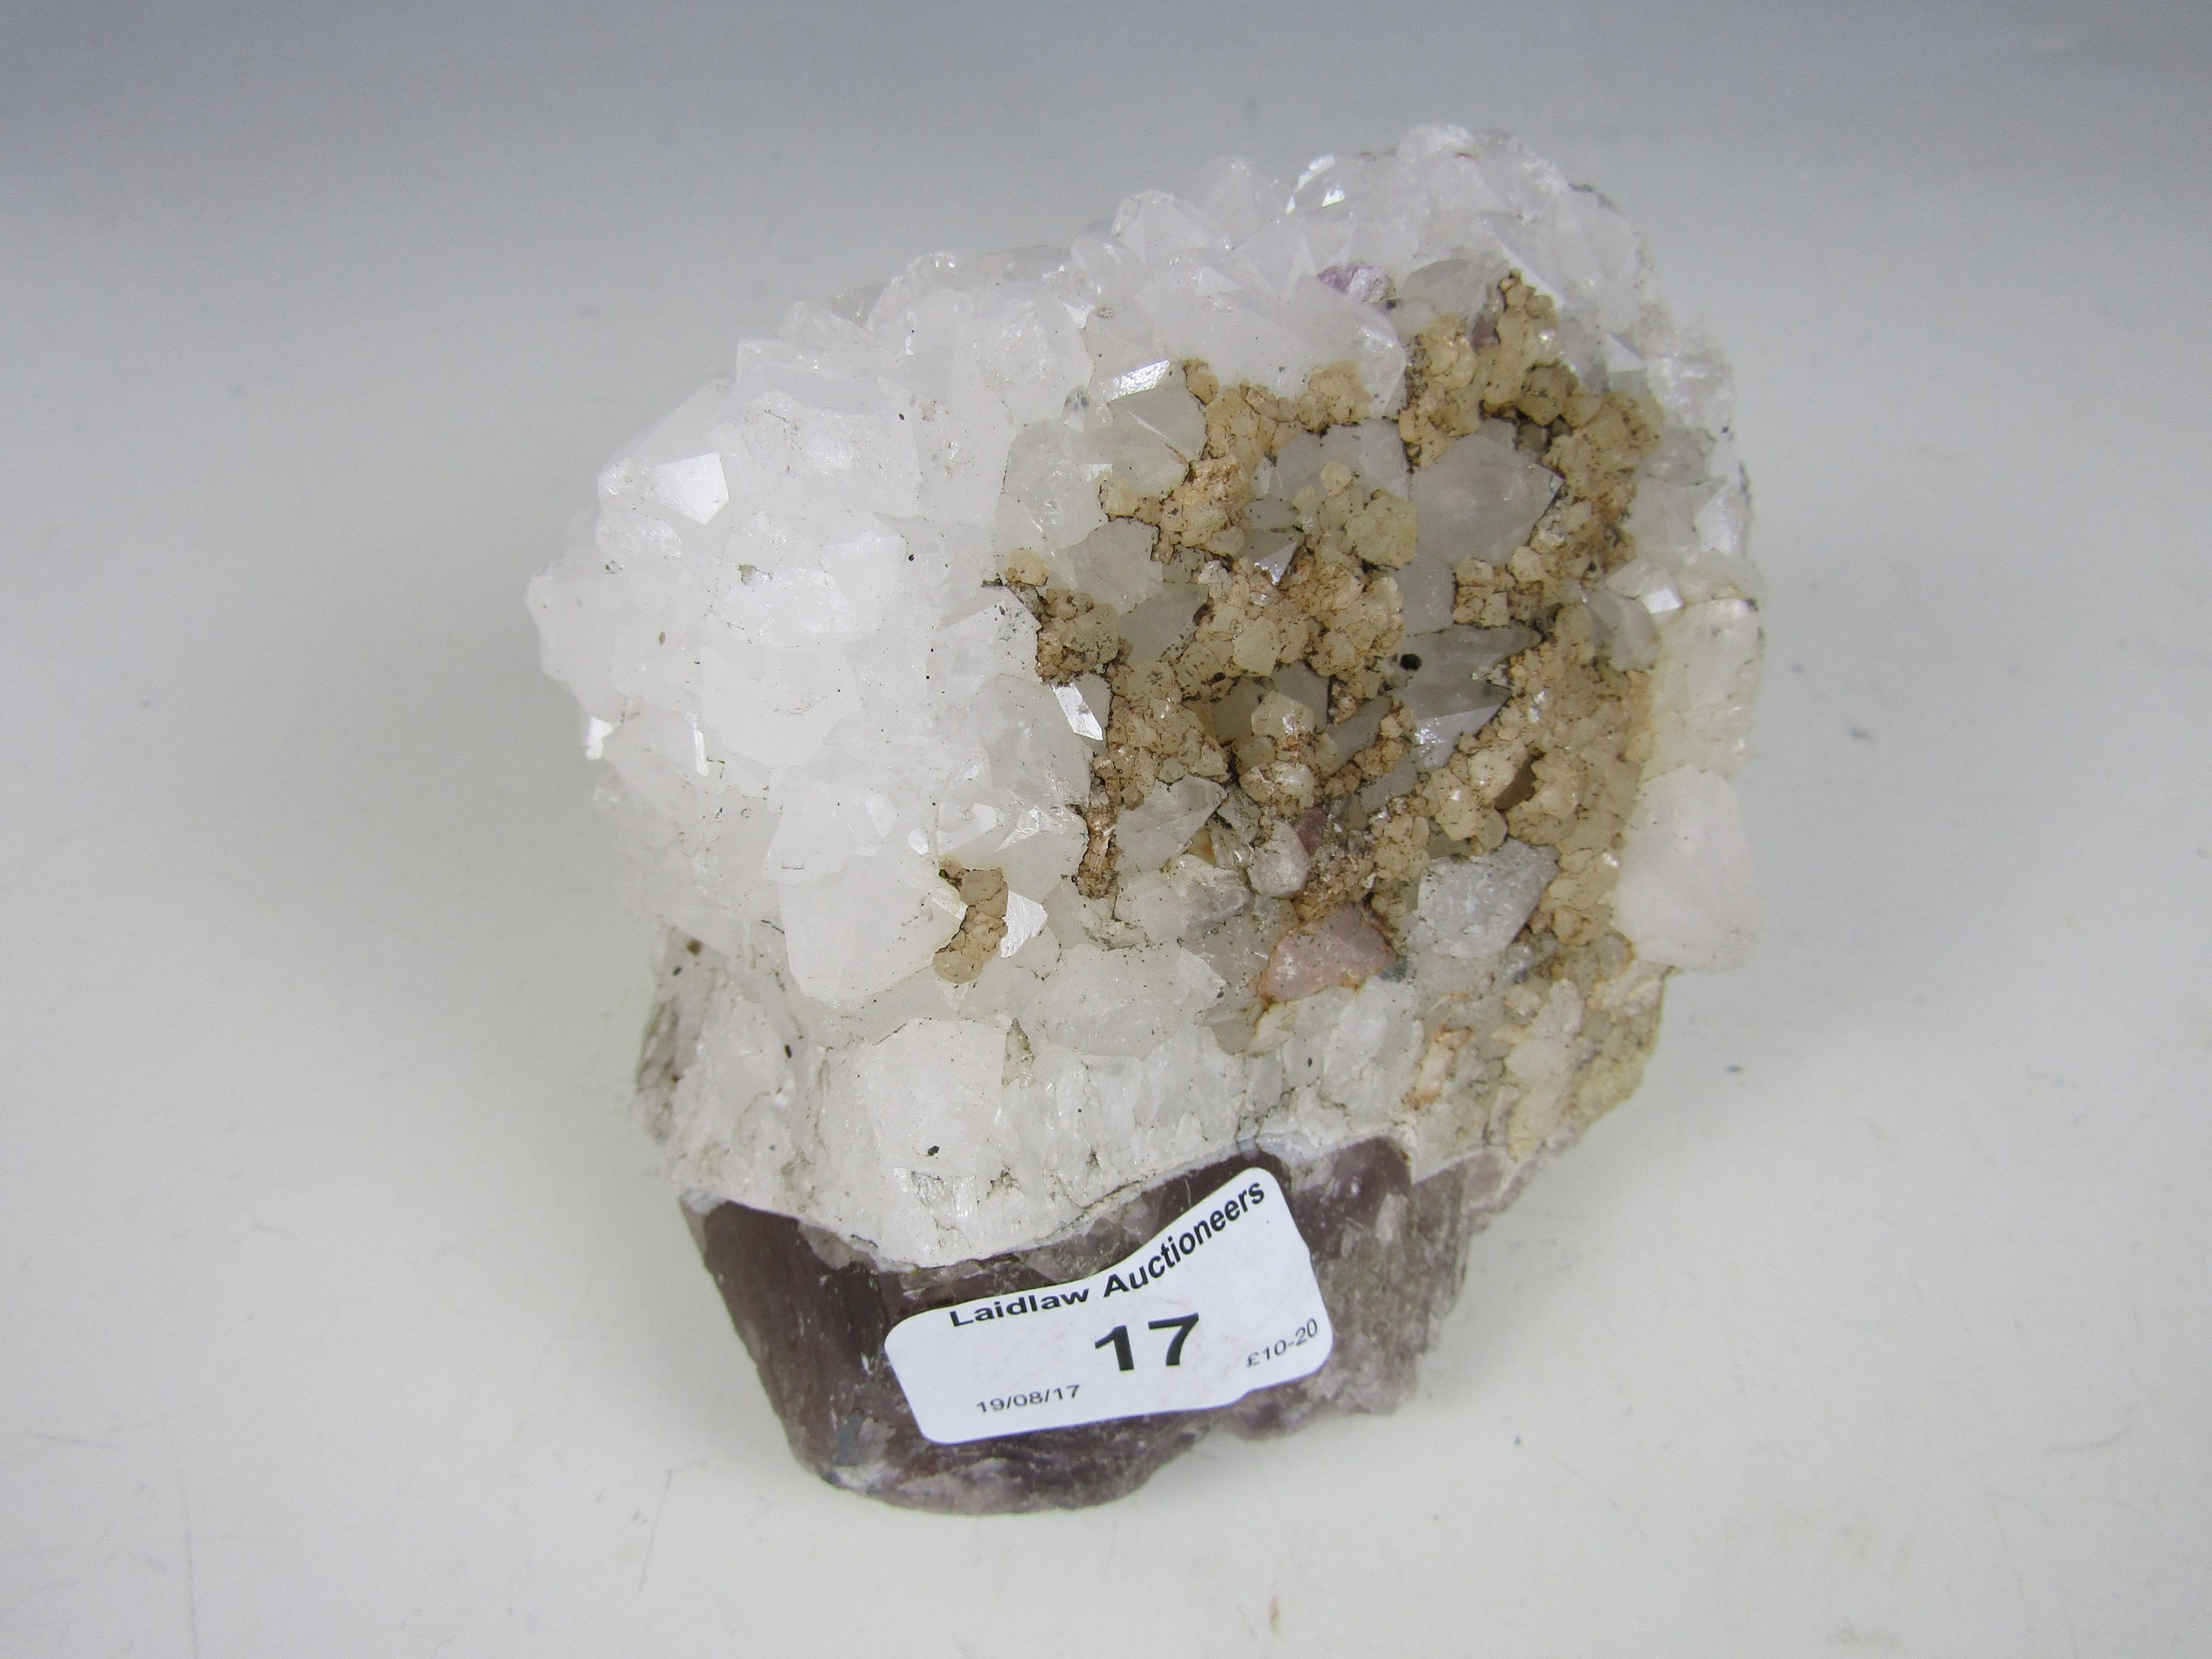 A large quartz crystal specimen